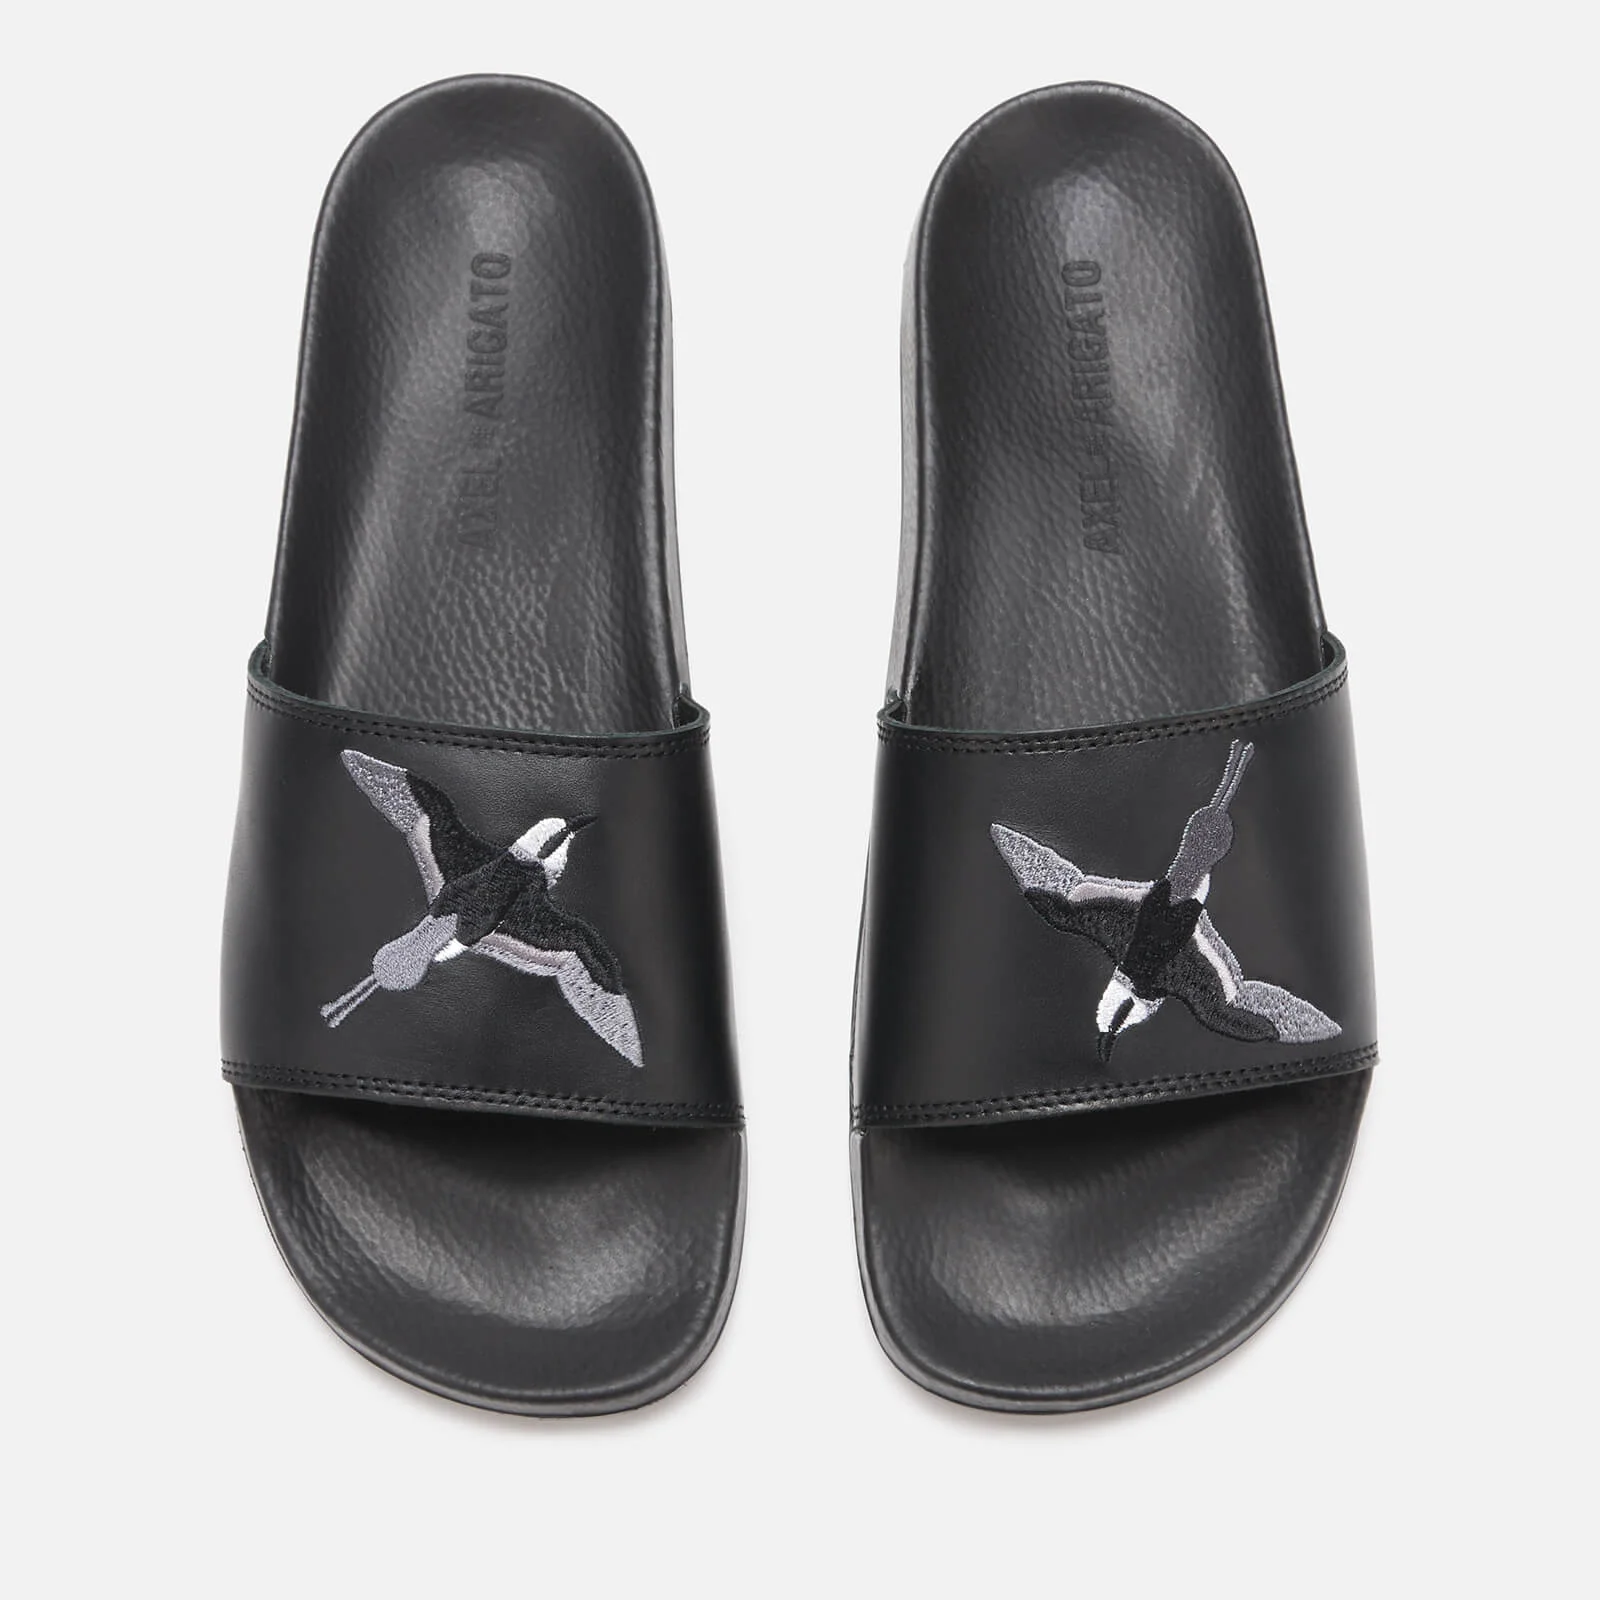 Axel Arigato Men's Slide Sandals - Black Image 1